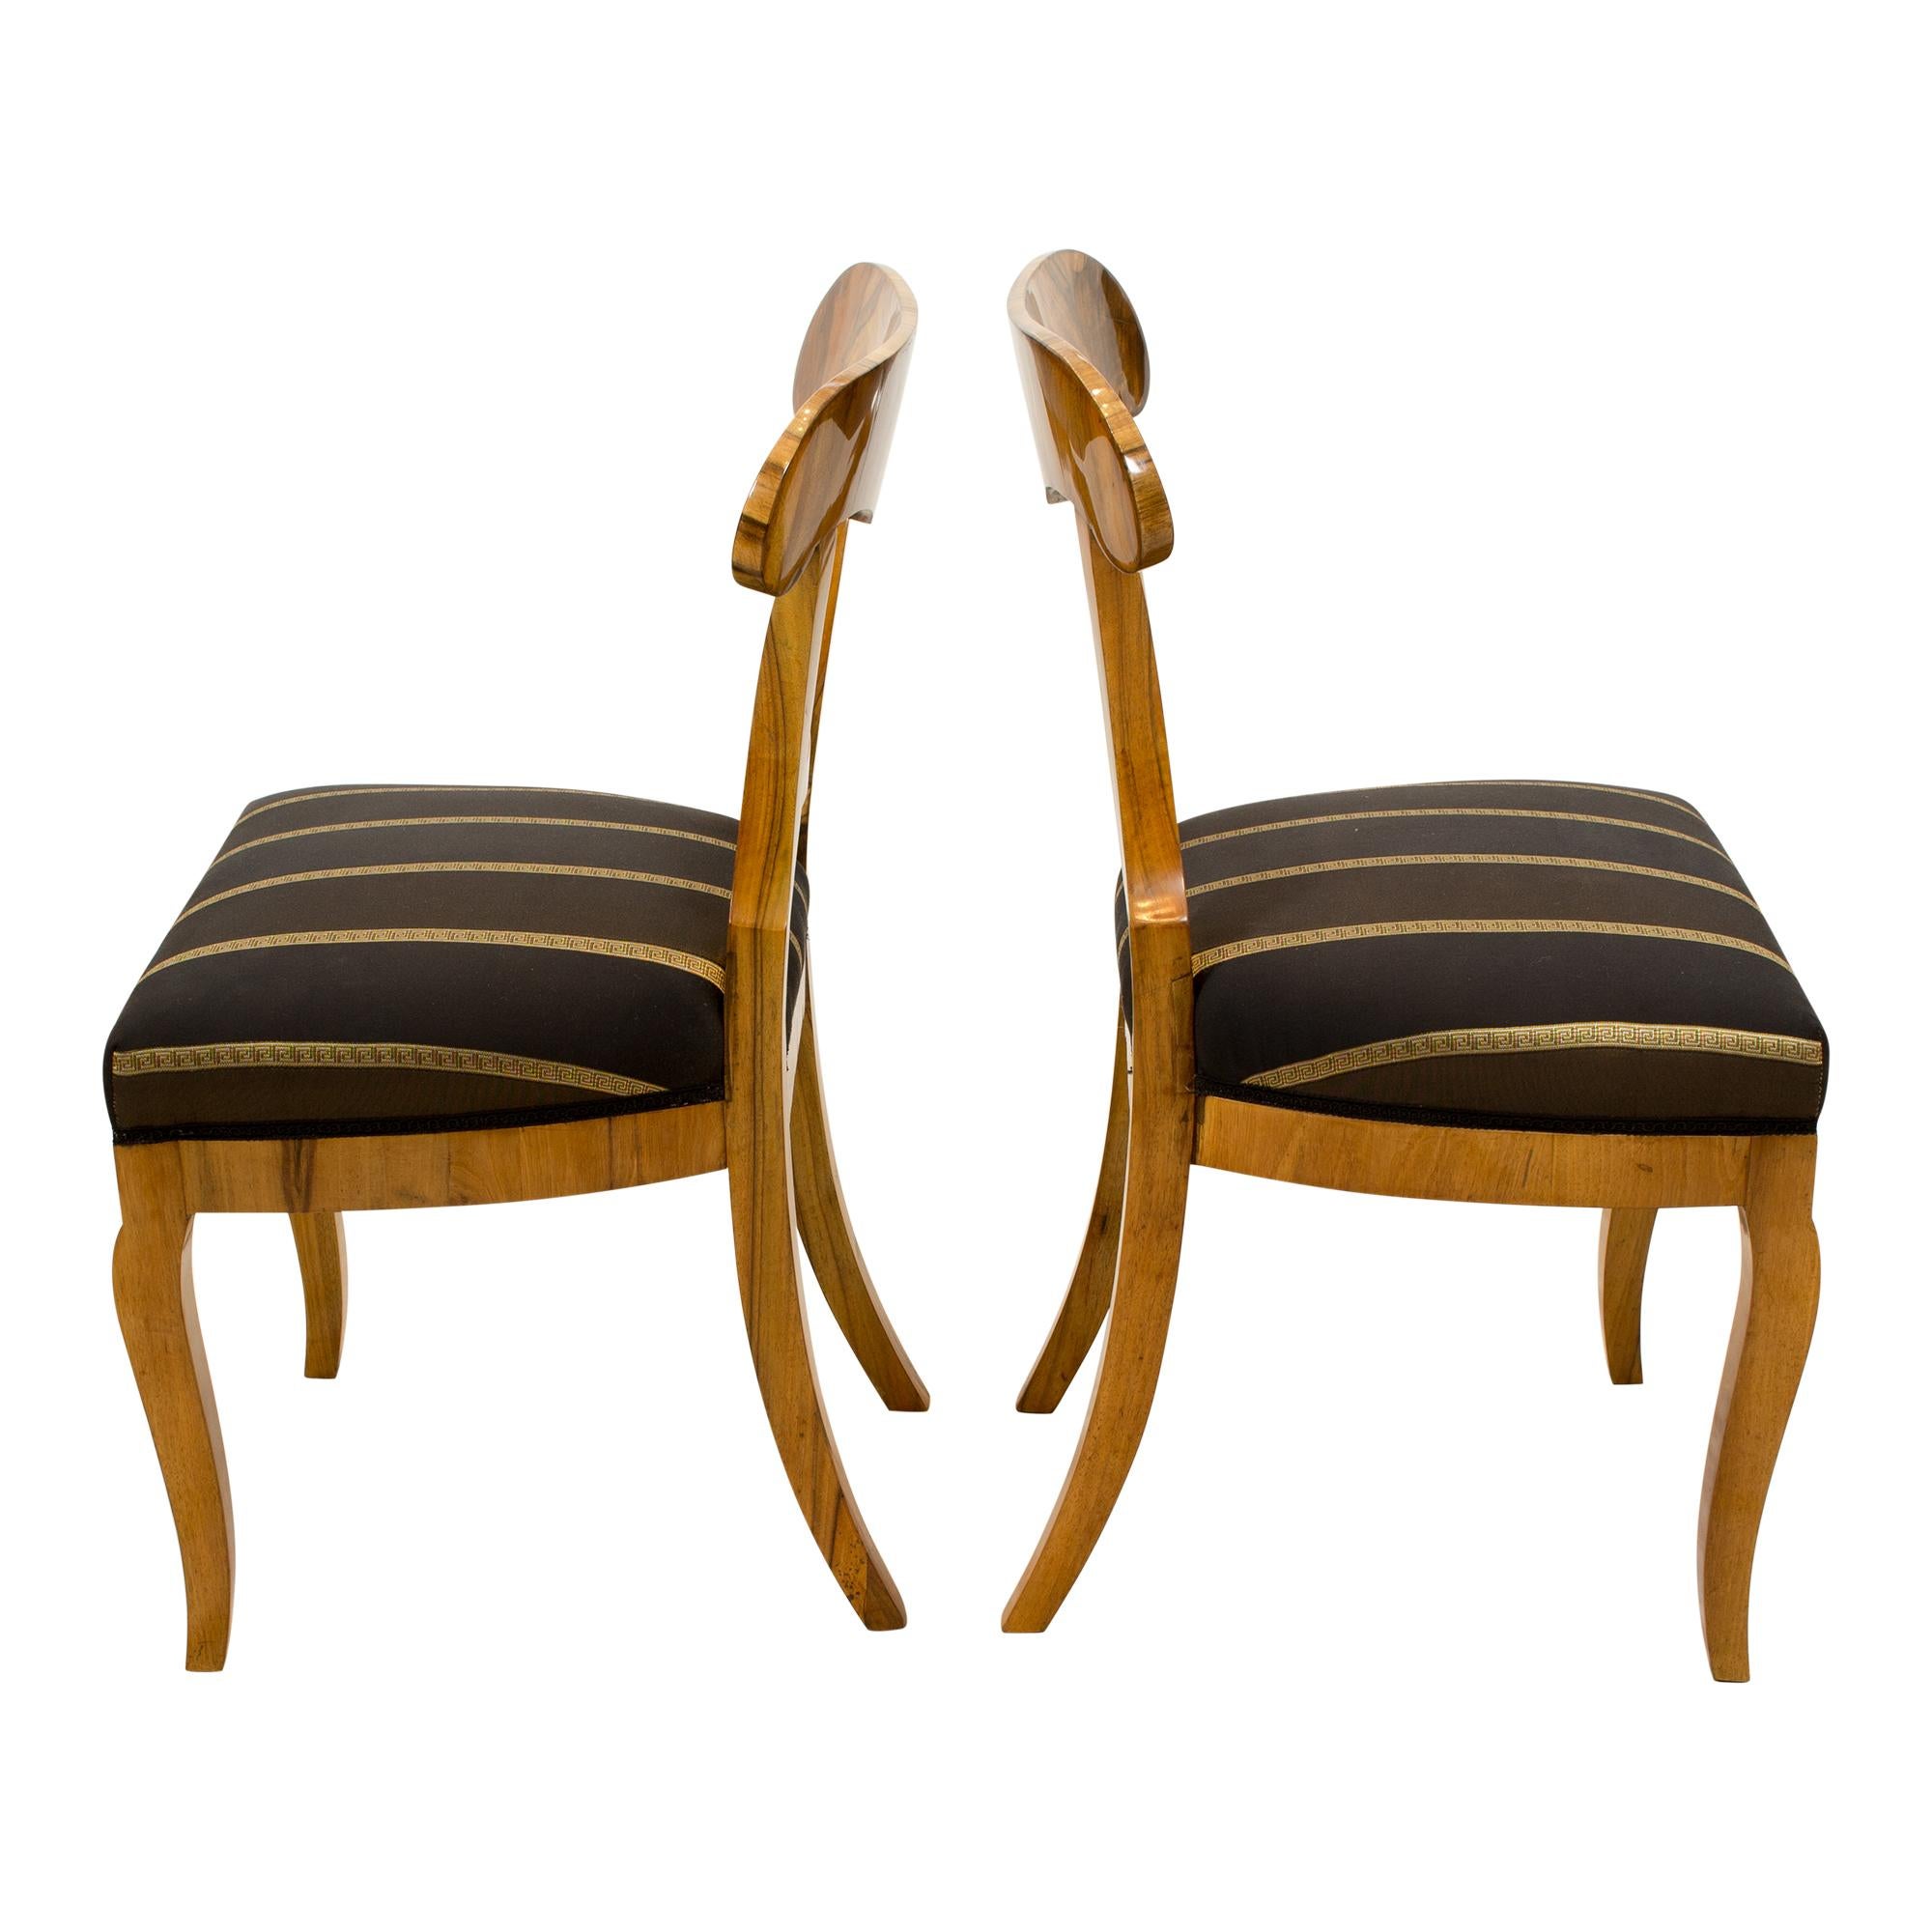 biedermeier chairs for sale